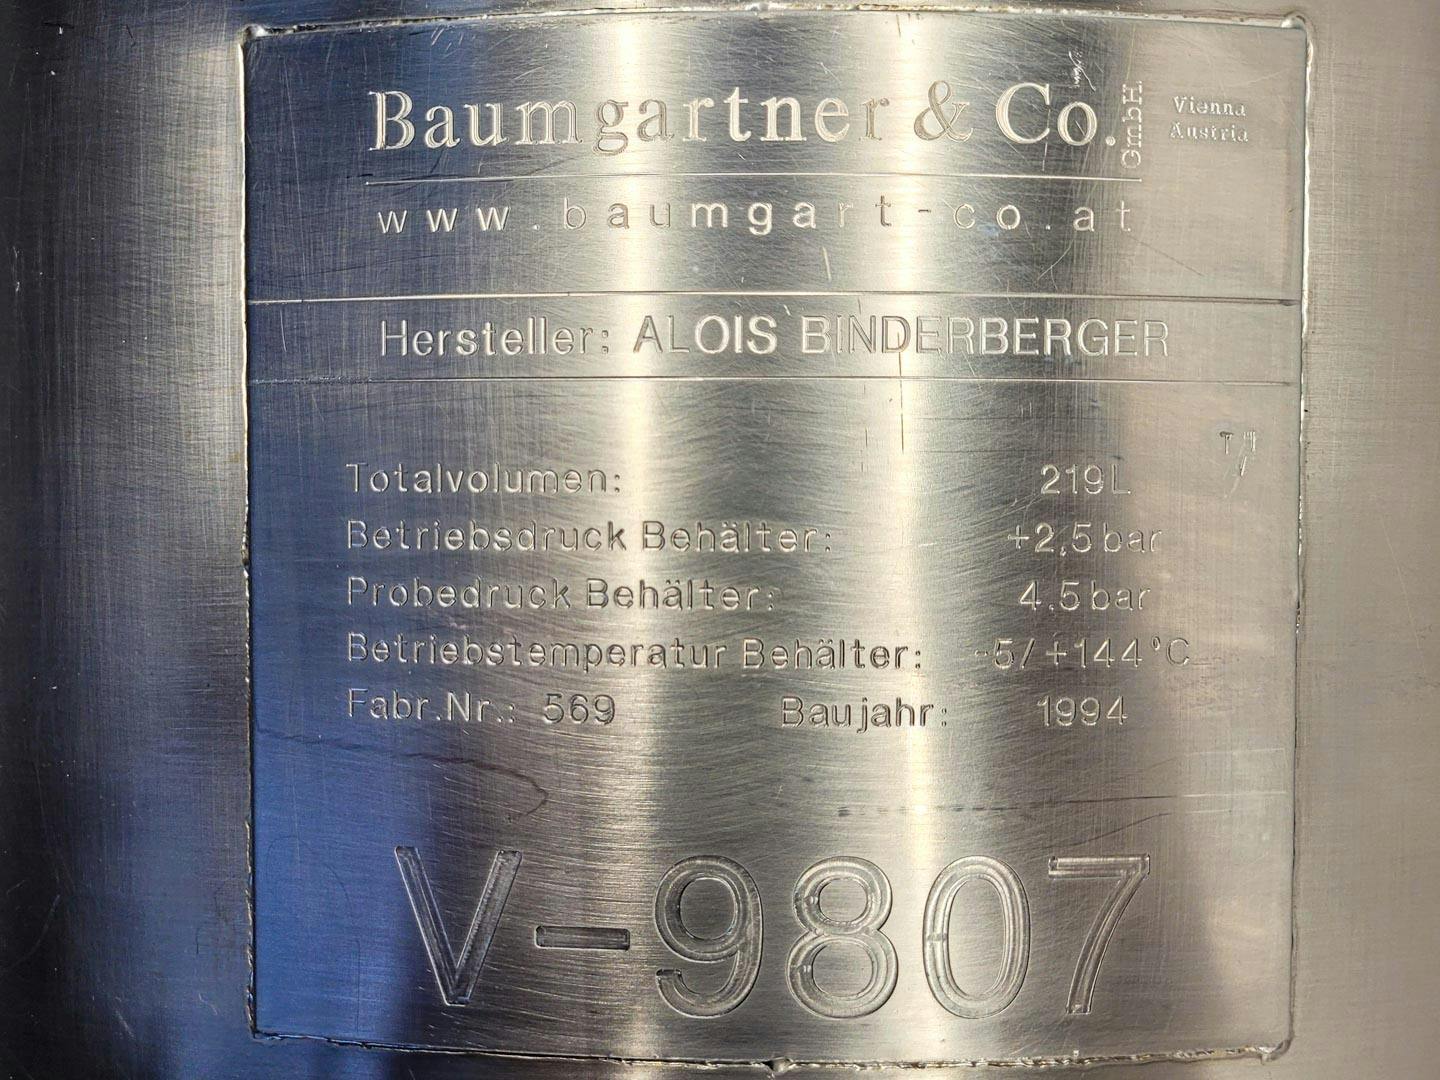 Baumgartner 219 Ltr. - Druckkessel - image 10